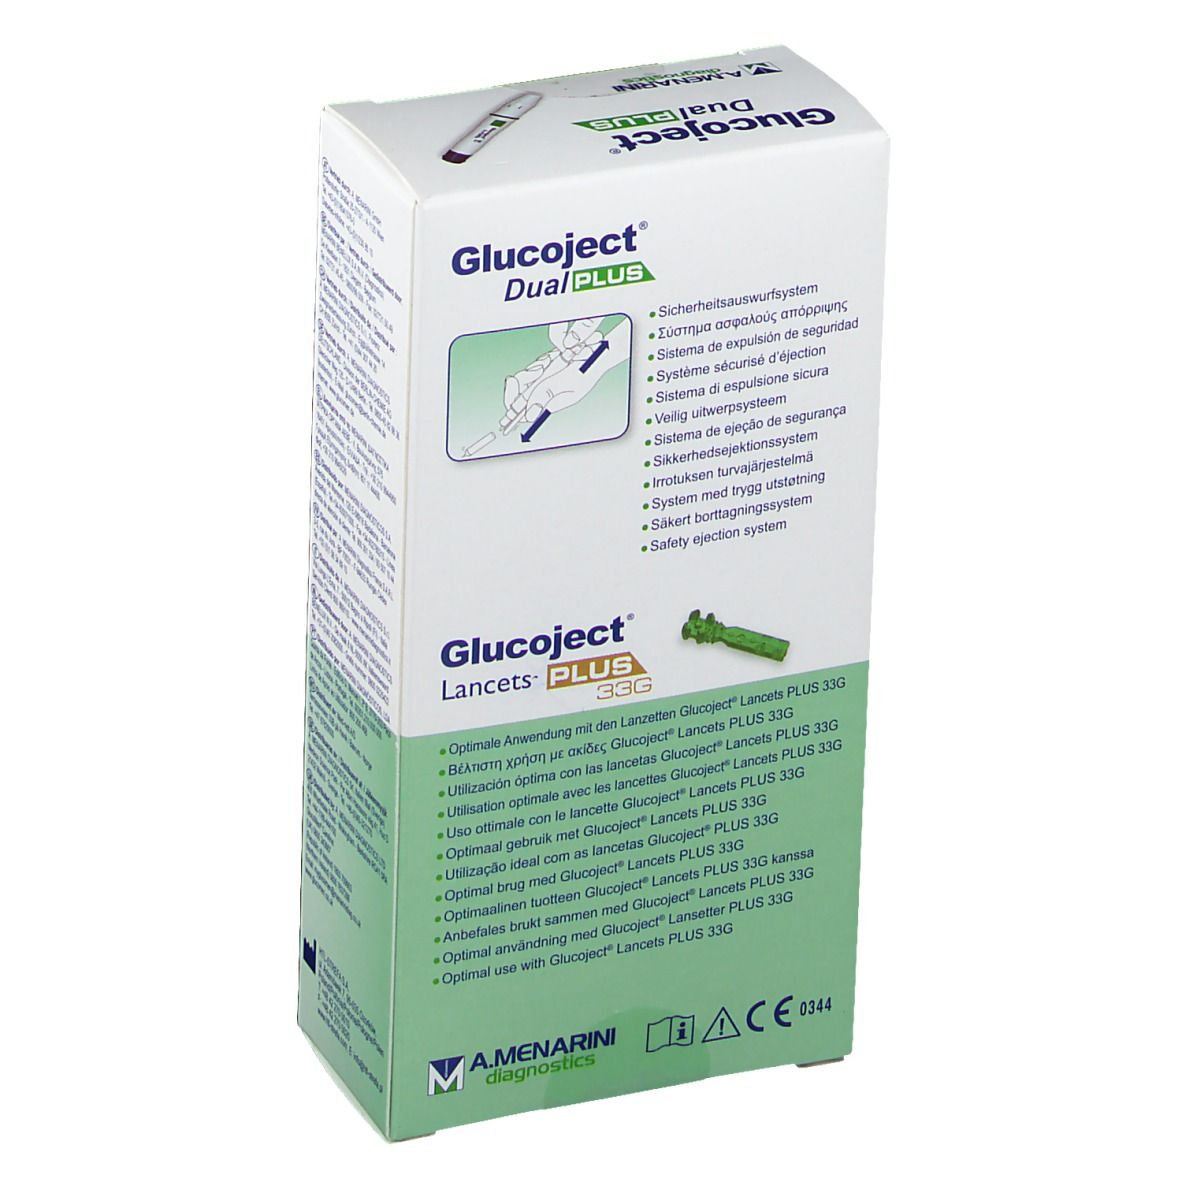 Glucoject® Dual Plus Autopiquer